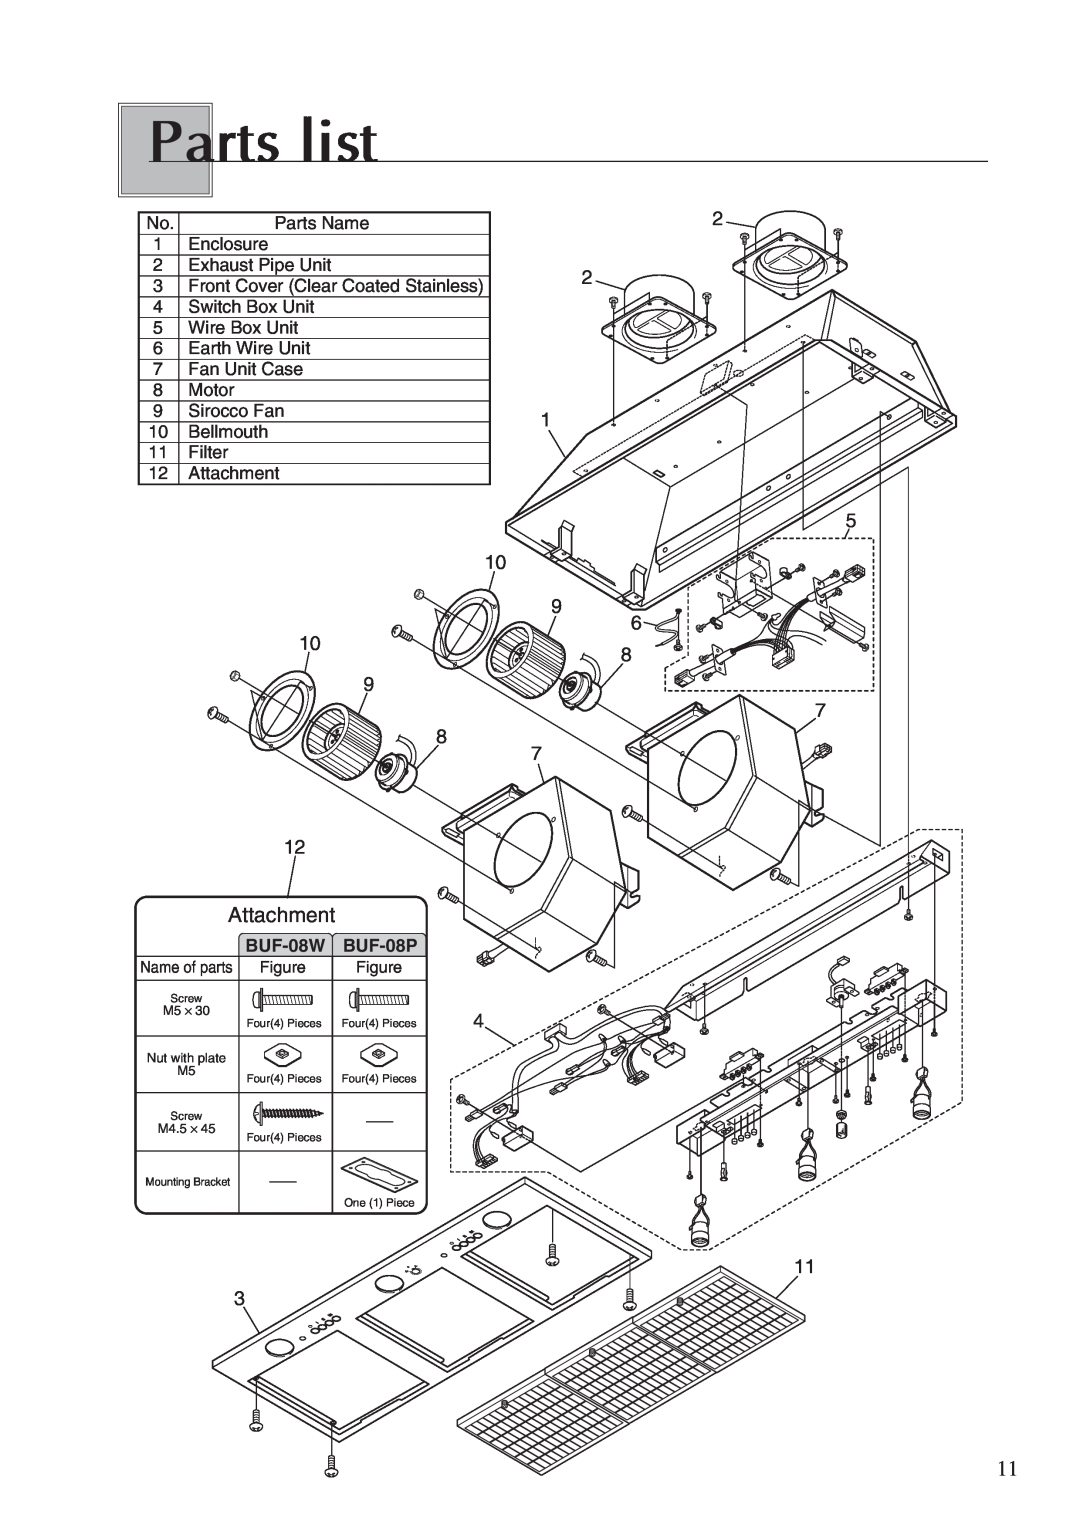 Fujioh operation manual Parts list, BUF-08W BUF-08P 